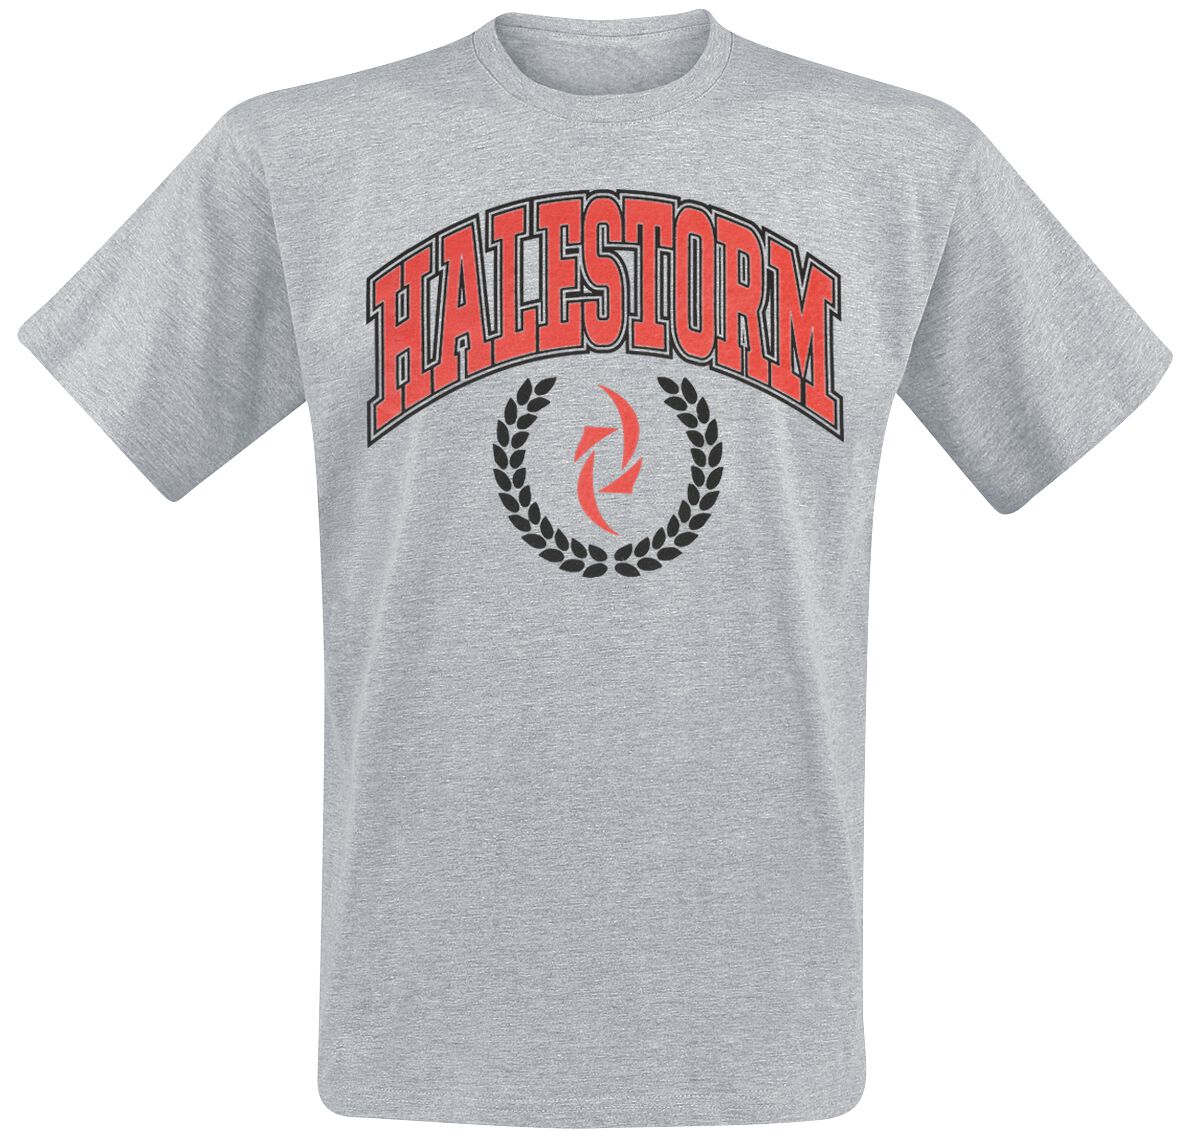 Halestorm Varsity Logo T-Shirt grau meliert in XL